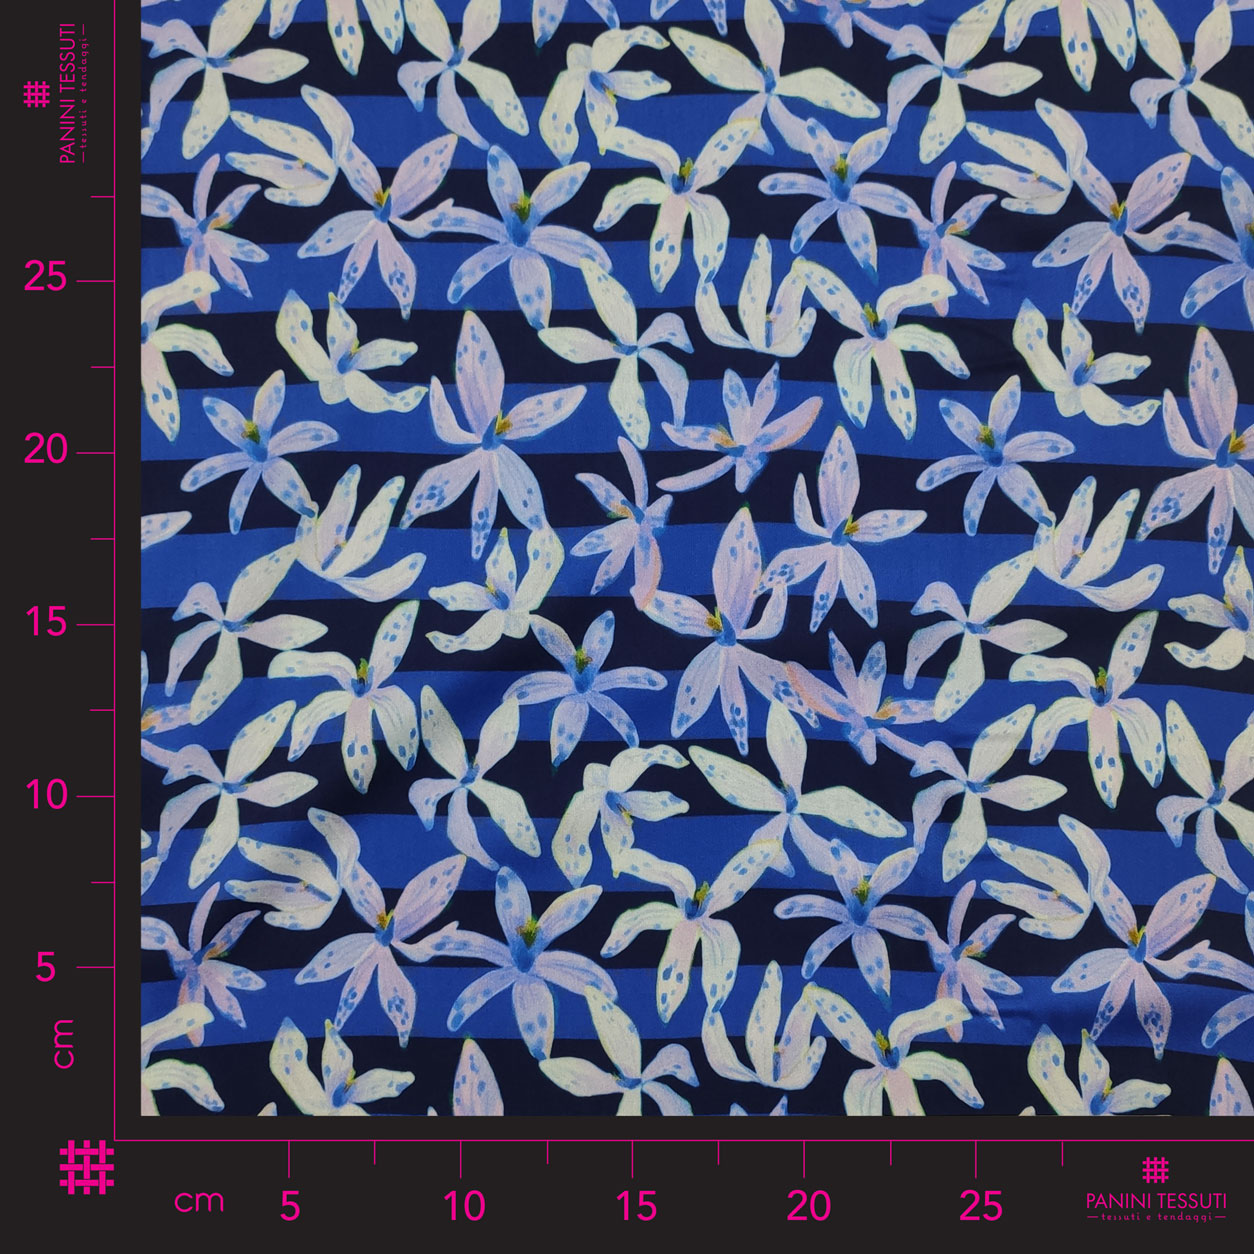 tessuto-viscosa-a-fiori-bianchi-sfondo-a-righe-blu